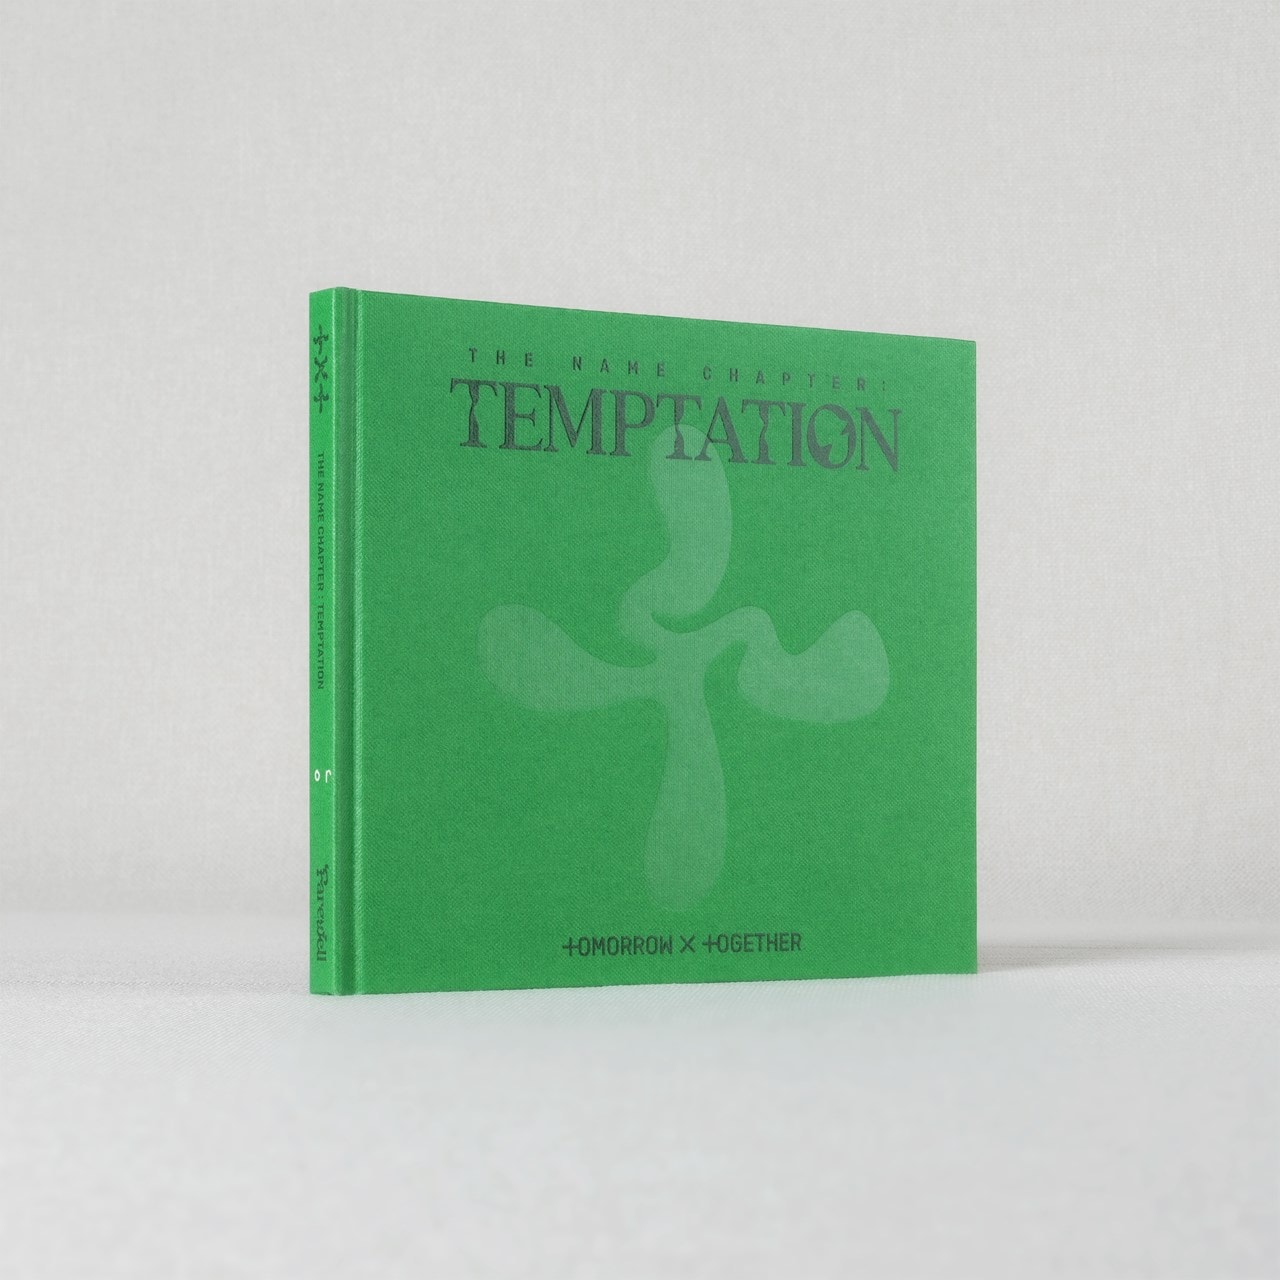 Temptation txt. Txt Temptation альбом. The name Chapter: Temptation альбом. Txt Temptation Farewell. Txt the name Chapter альбом.